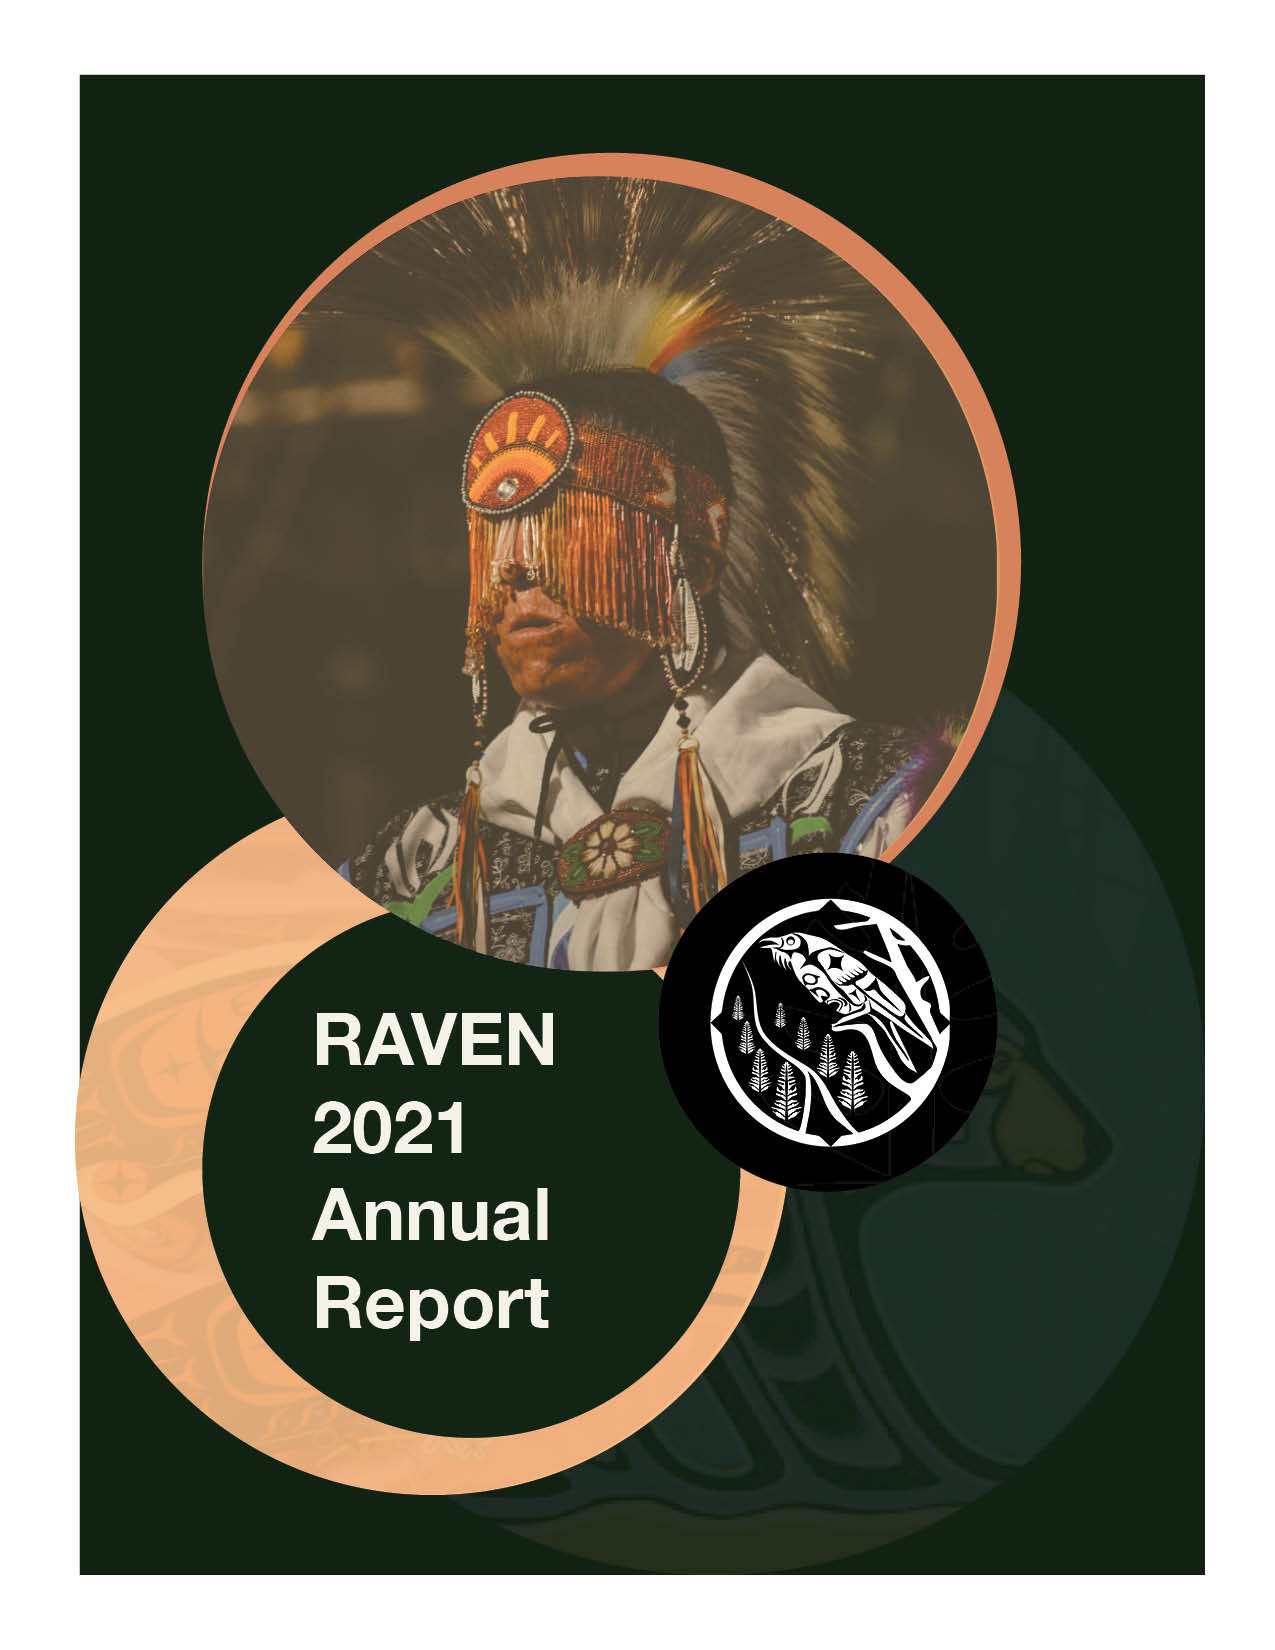 RAVEN annual report 2021 cover